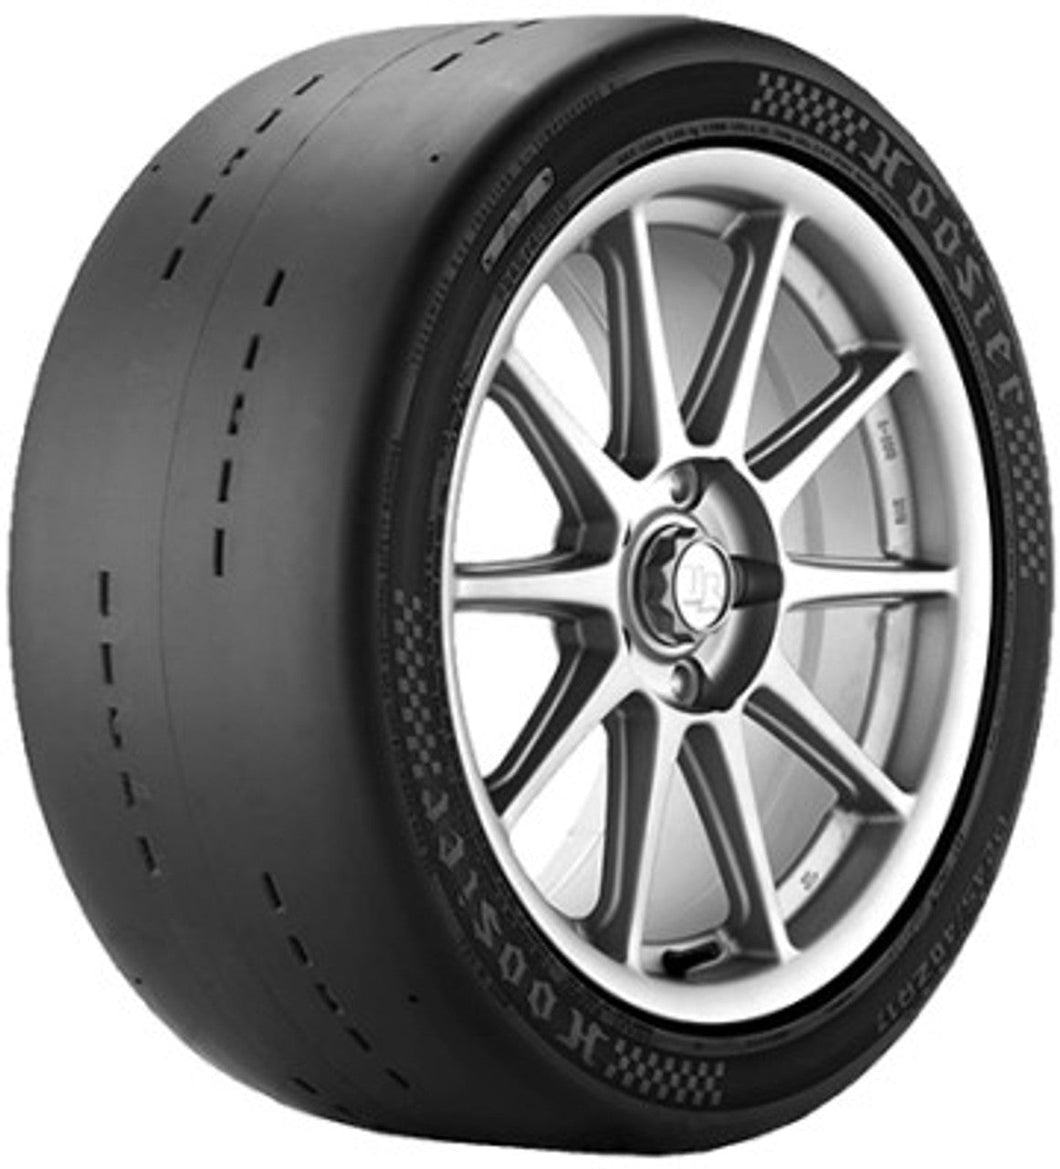 305/30 ZR20 Hoosier Tire Slick D.O.T Neumático